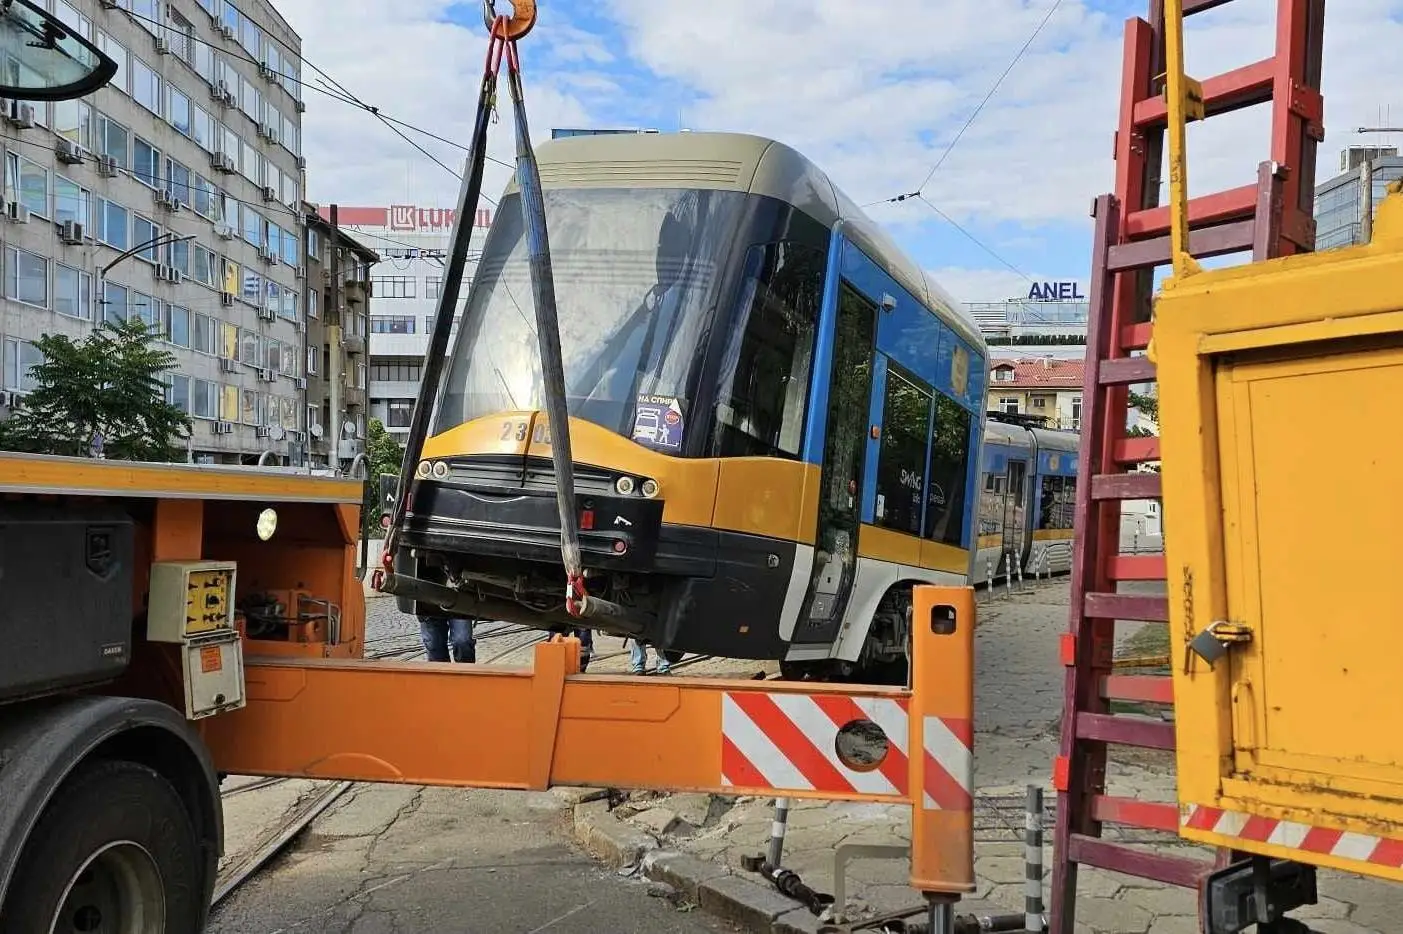 Трамвай 7 дерайлира до пл. Възраждане в София  